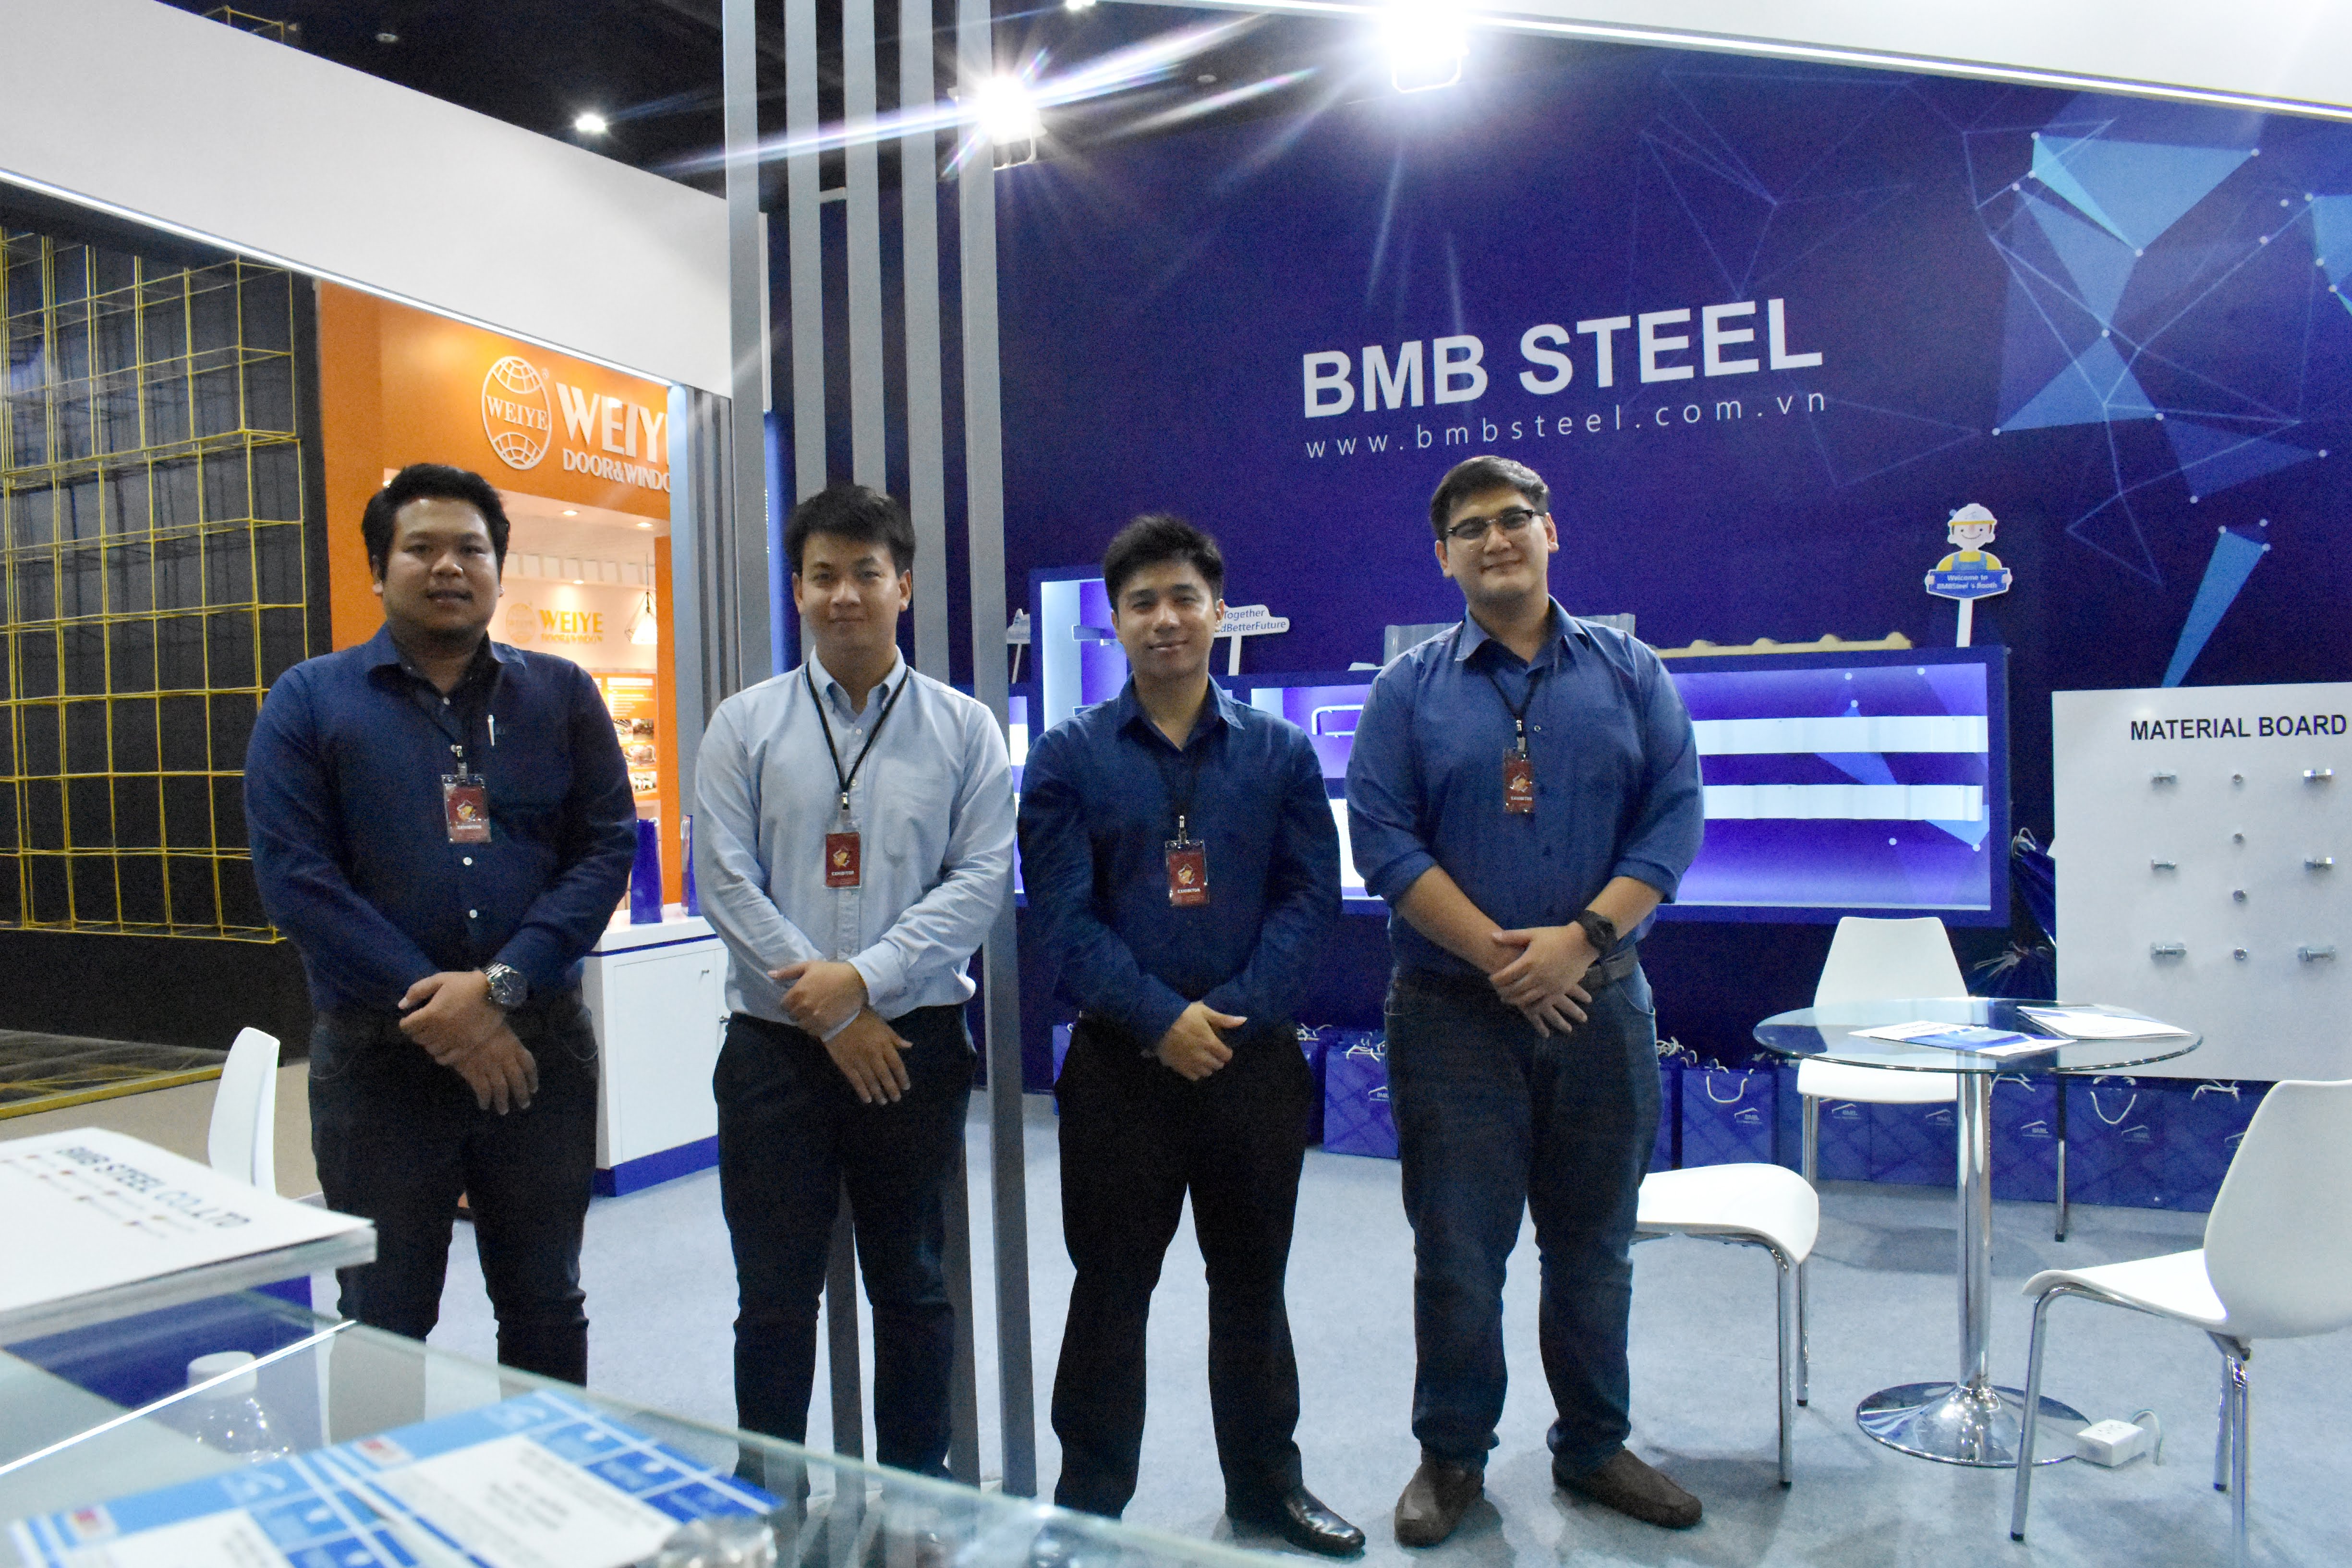 BMB Steel participated Thai Architect'18 expo in Thailand 6